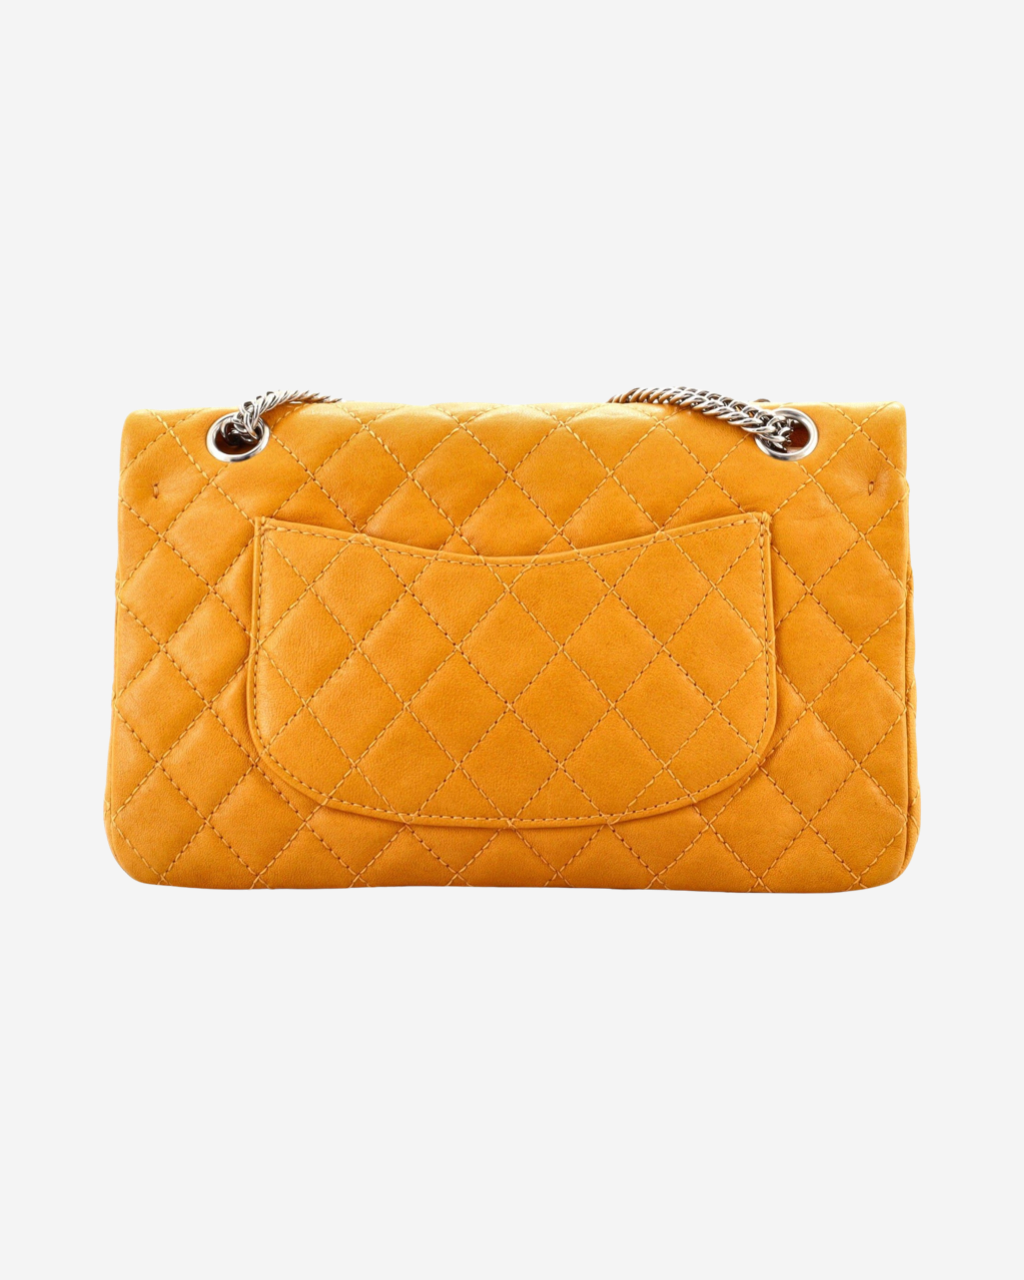 Chanel Classic Flap Girl Bag